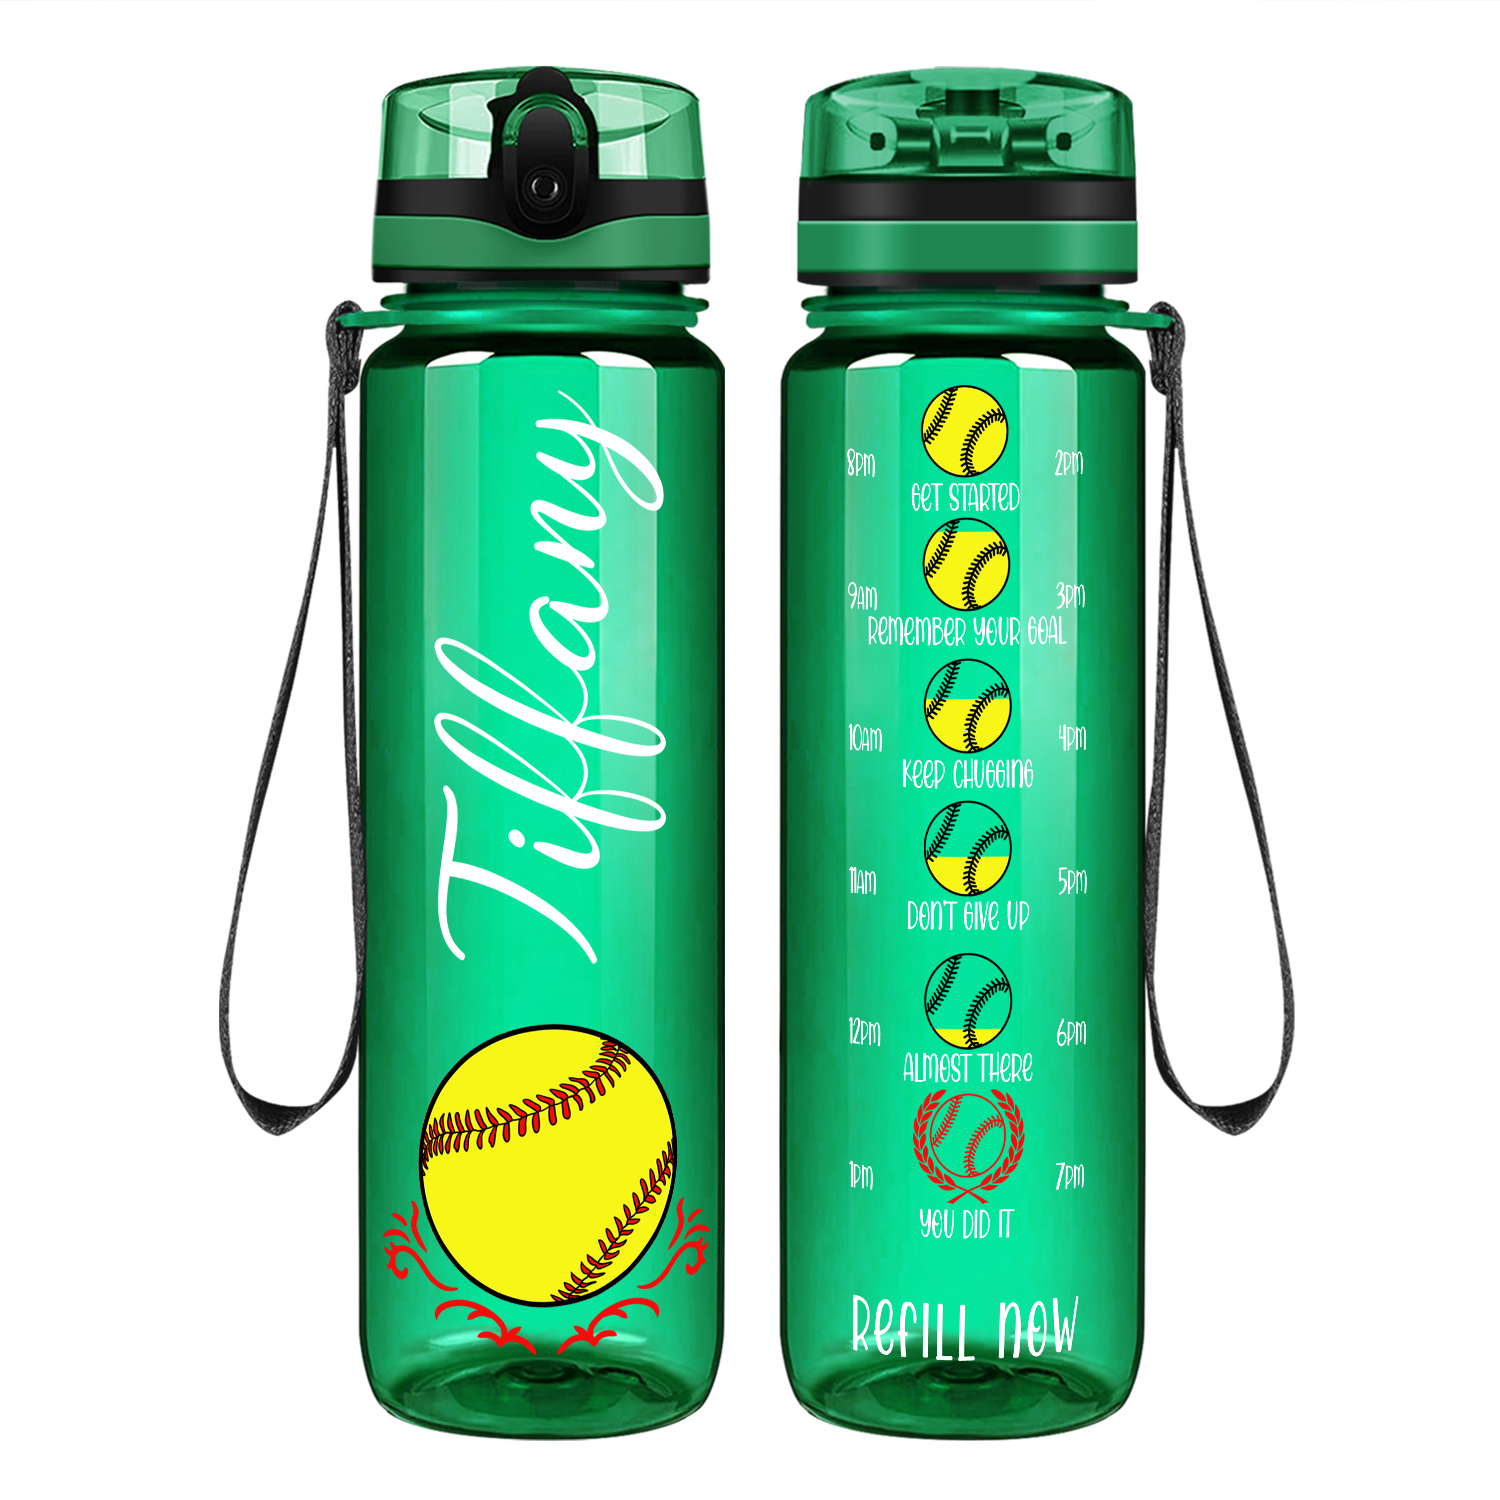 Promotional Water Bottles 32 oz Water Bottle with Trekker Lid Sample